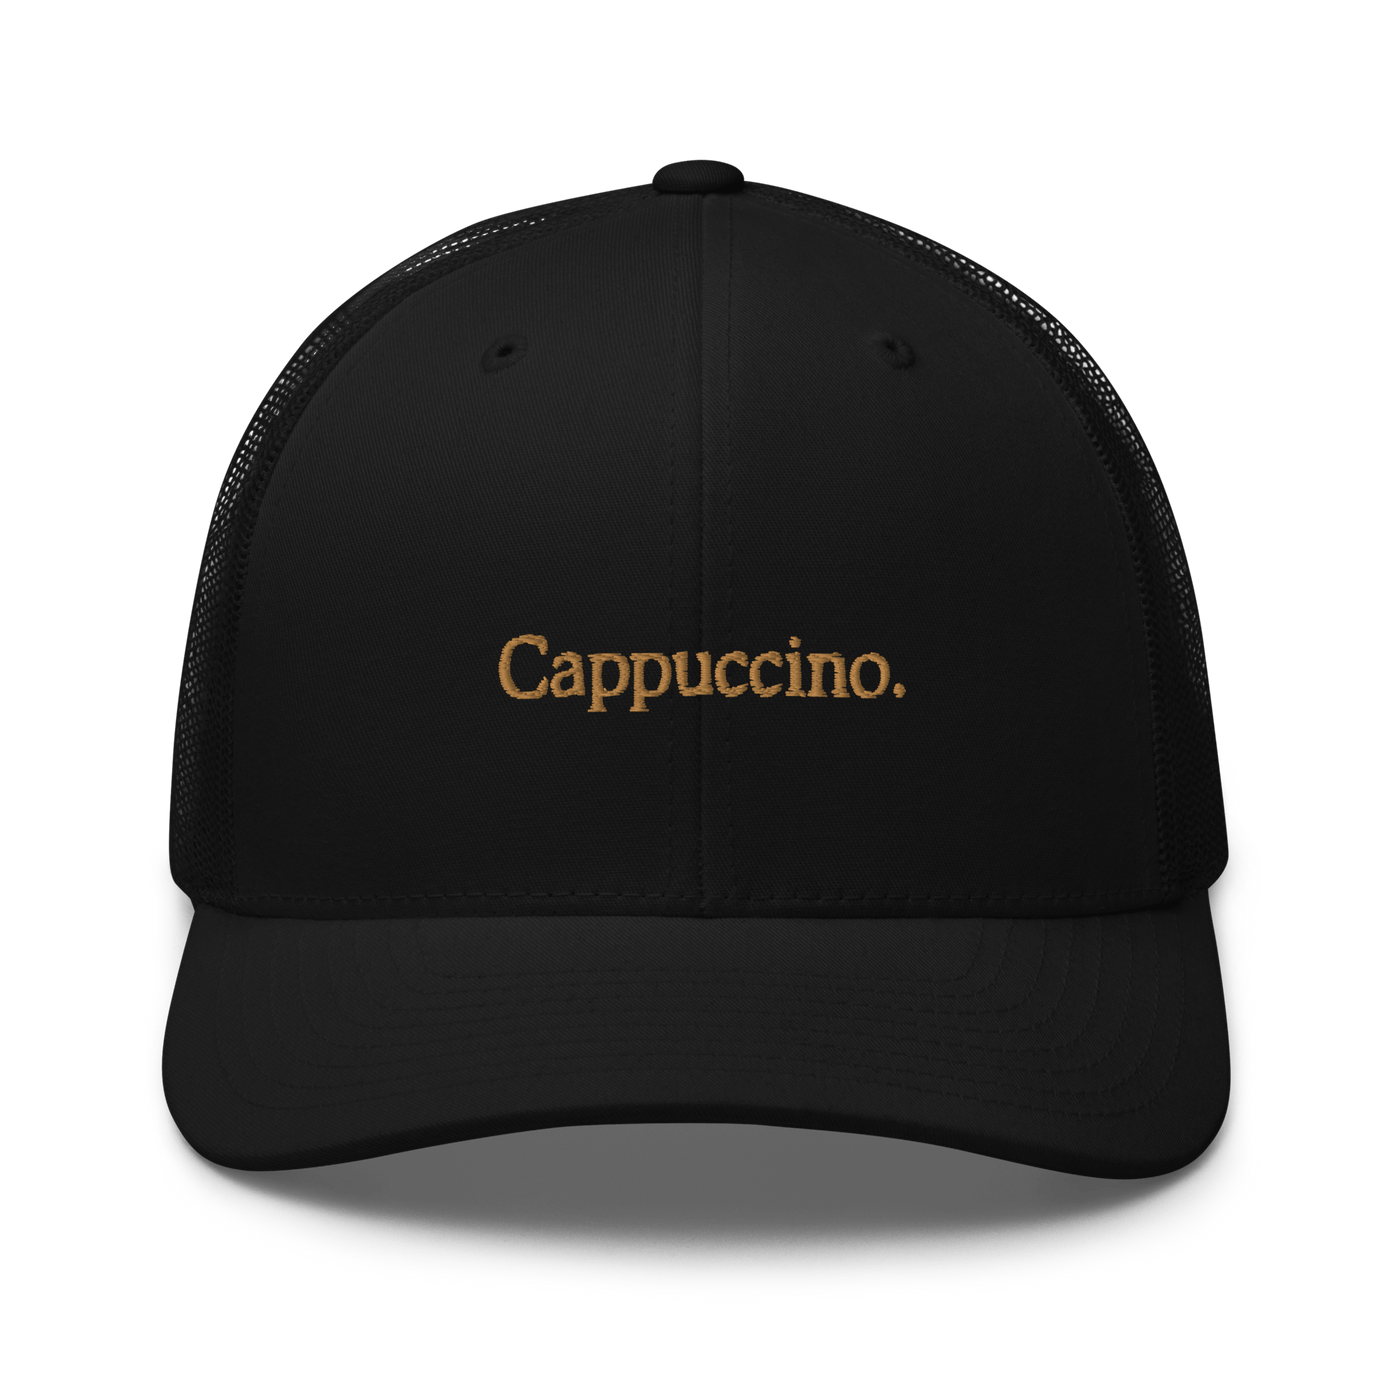 Cappuccino. Trucker Cap - Black - - Just Another Cap Store